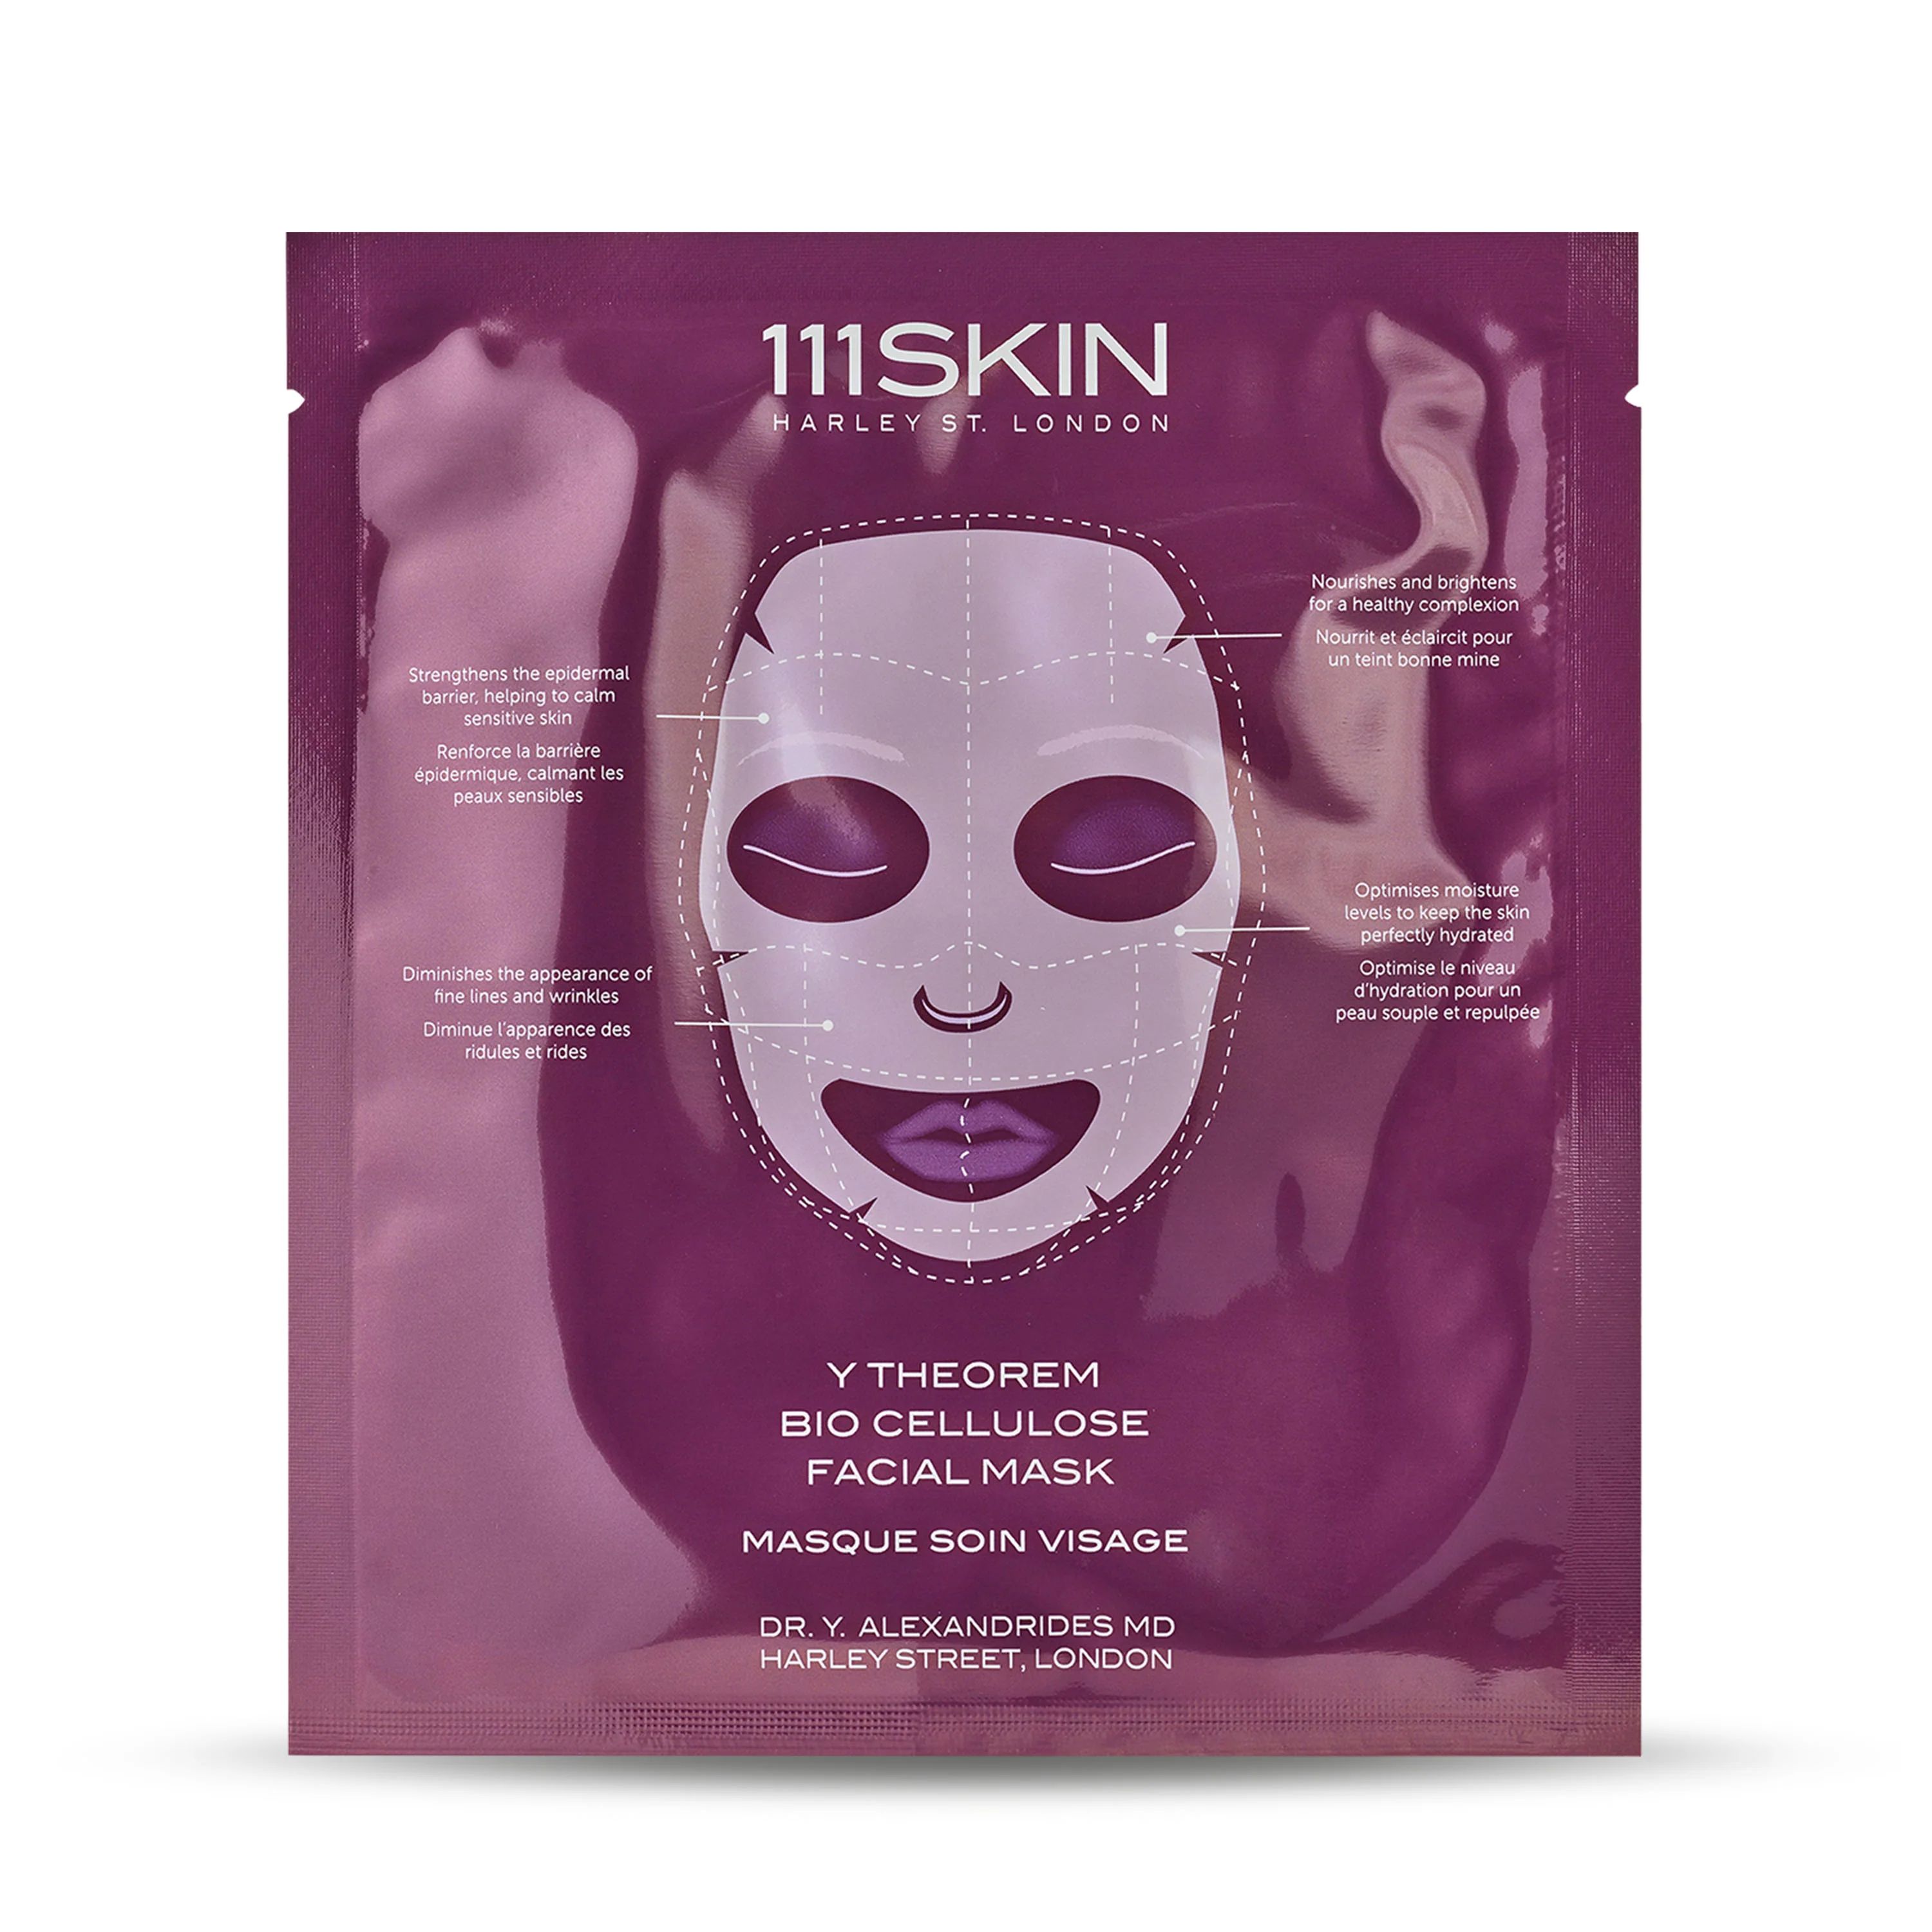 Y Theorem Bio Cellulose Facial Mask | 111Skin US